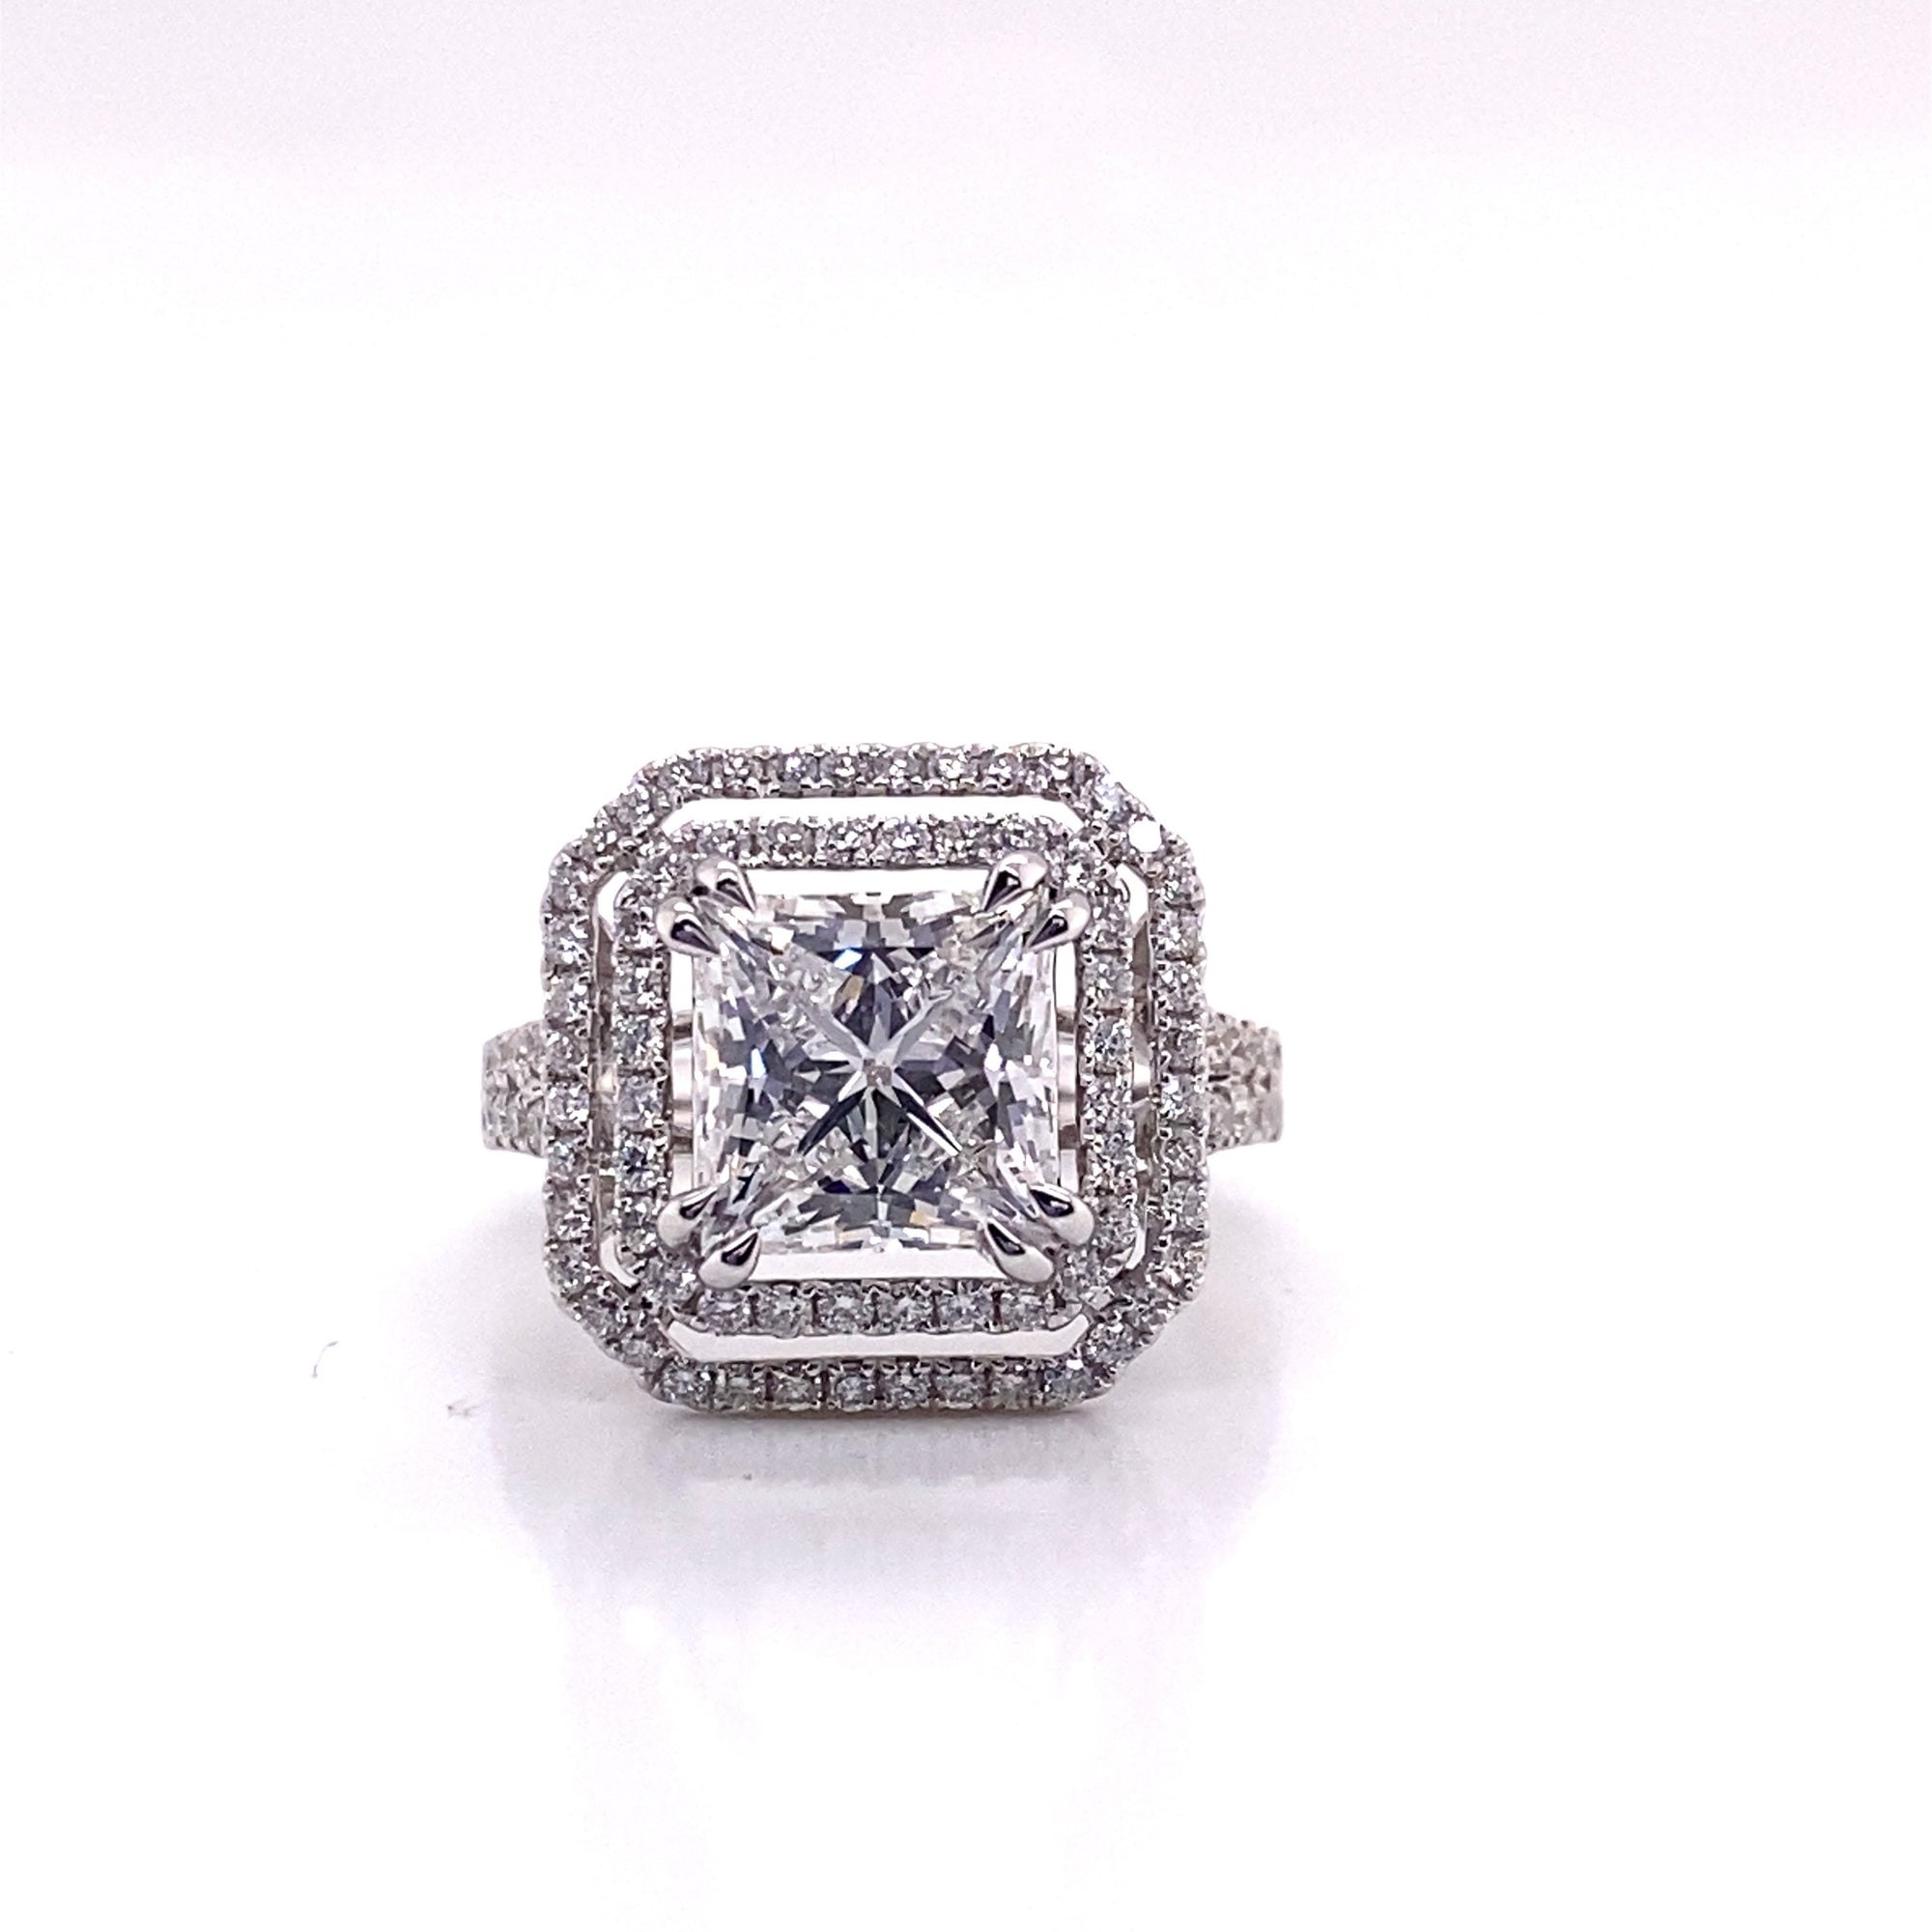 14K W.G. DIAMOND RING DOUBLE HALO DESIGN; CENTER PRINCESS CUT DIAMOND  MARKED ZEI | eBay